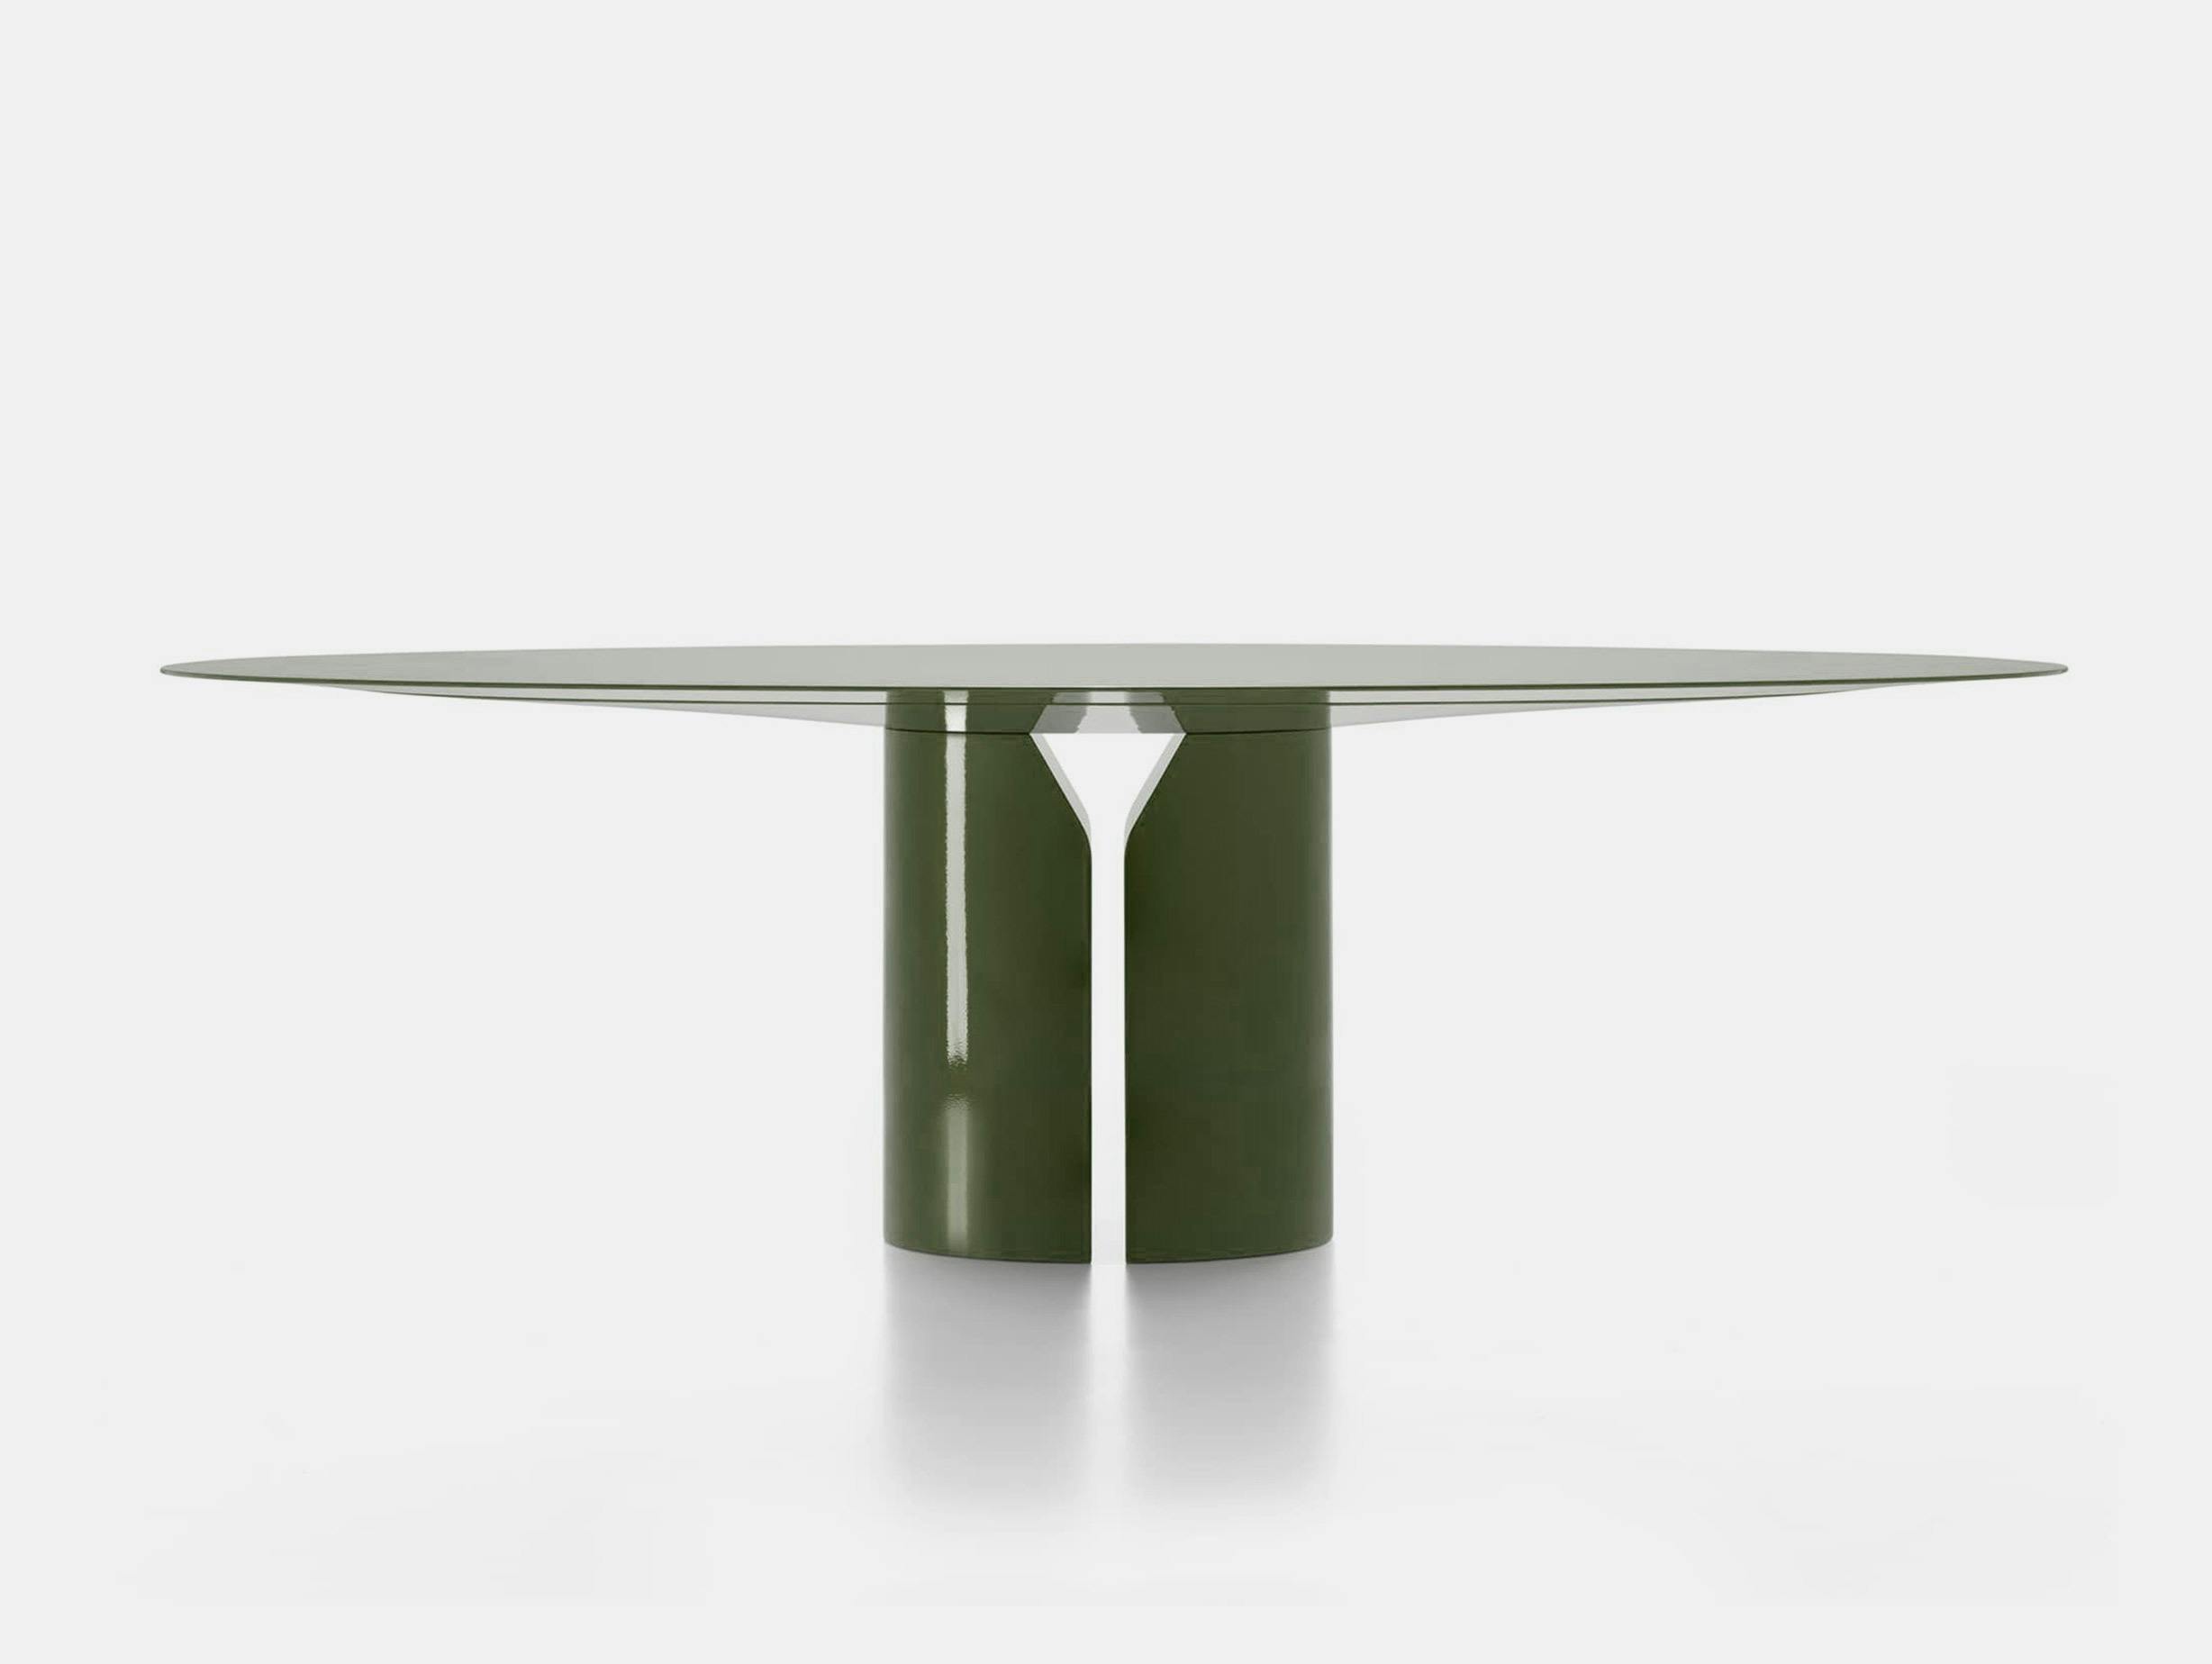 Mdf italia Jean Nouvel Design ndf table oval gloss english green